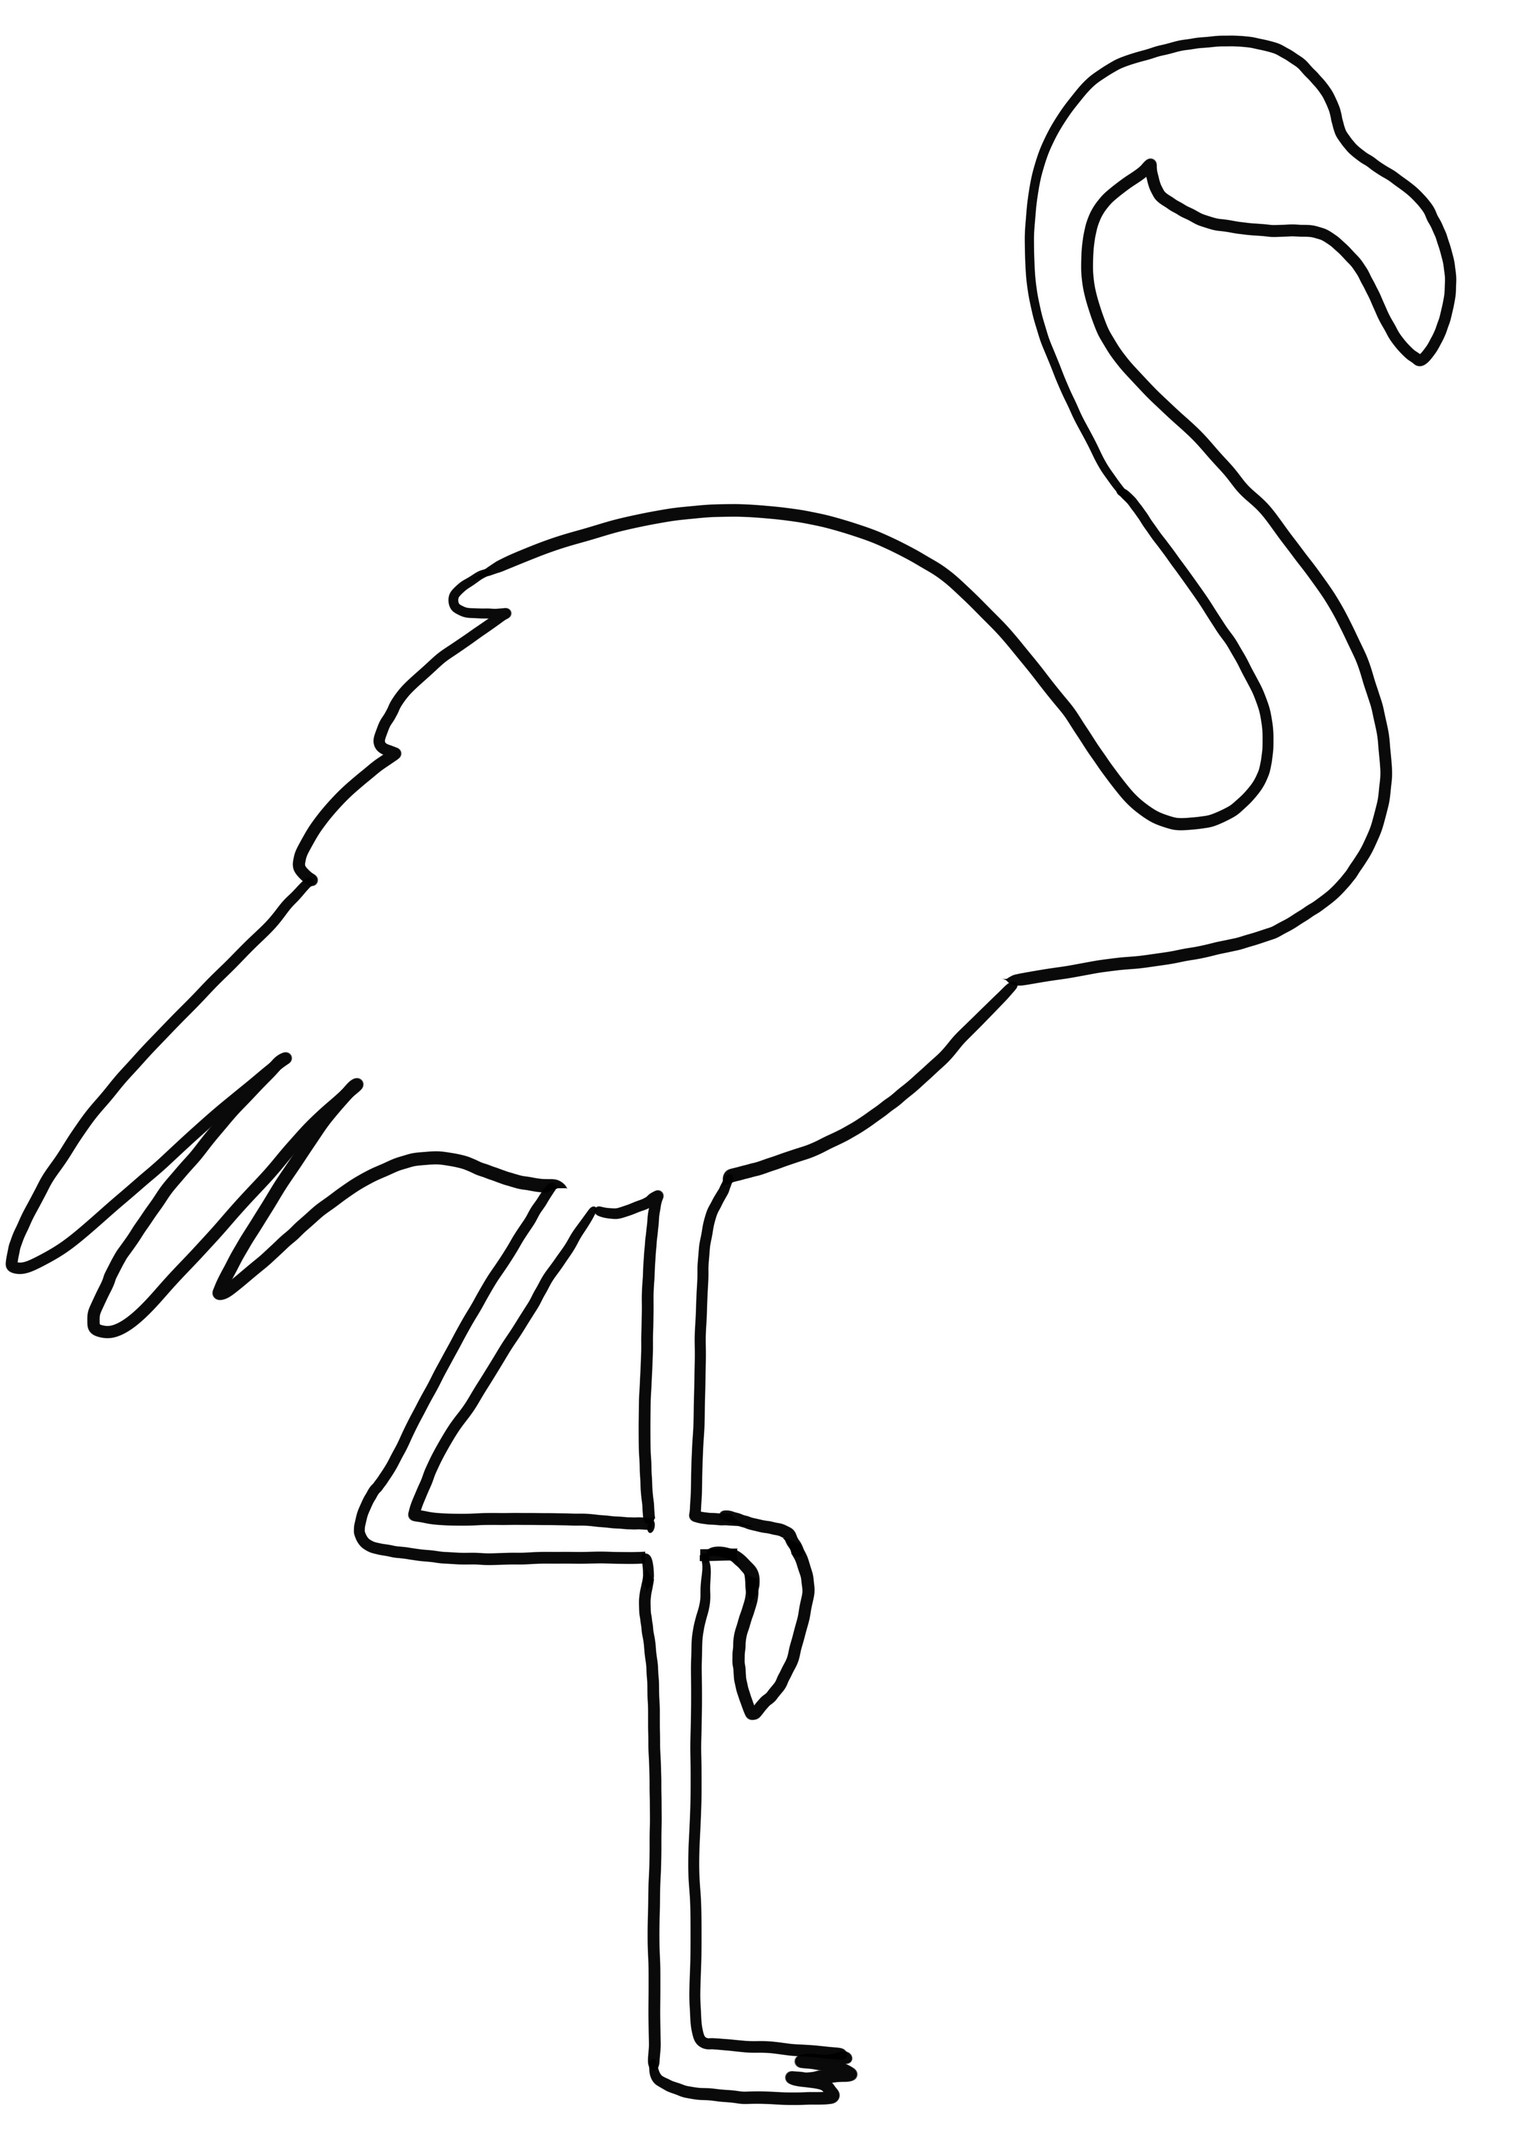 Realistic Flamingo coloring page